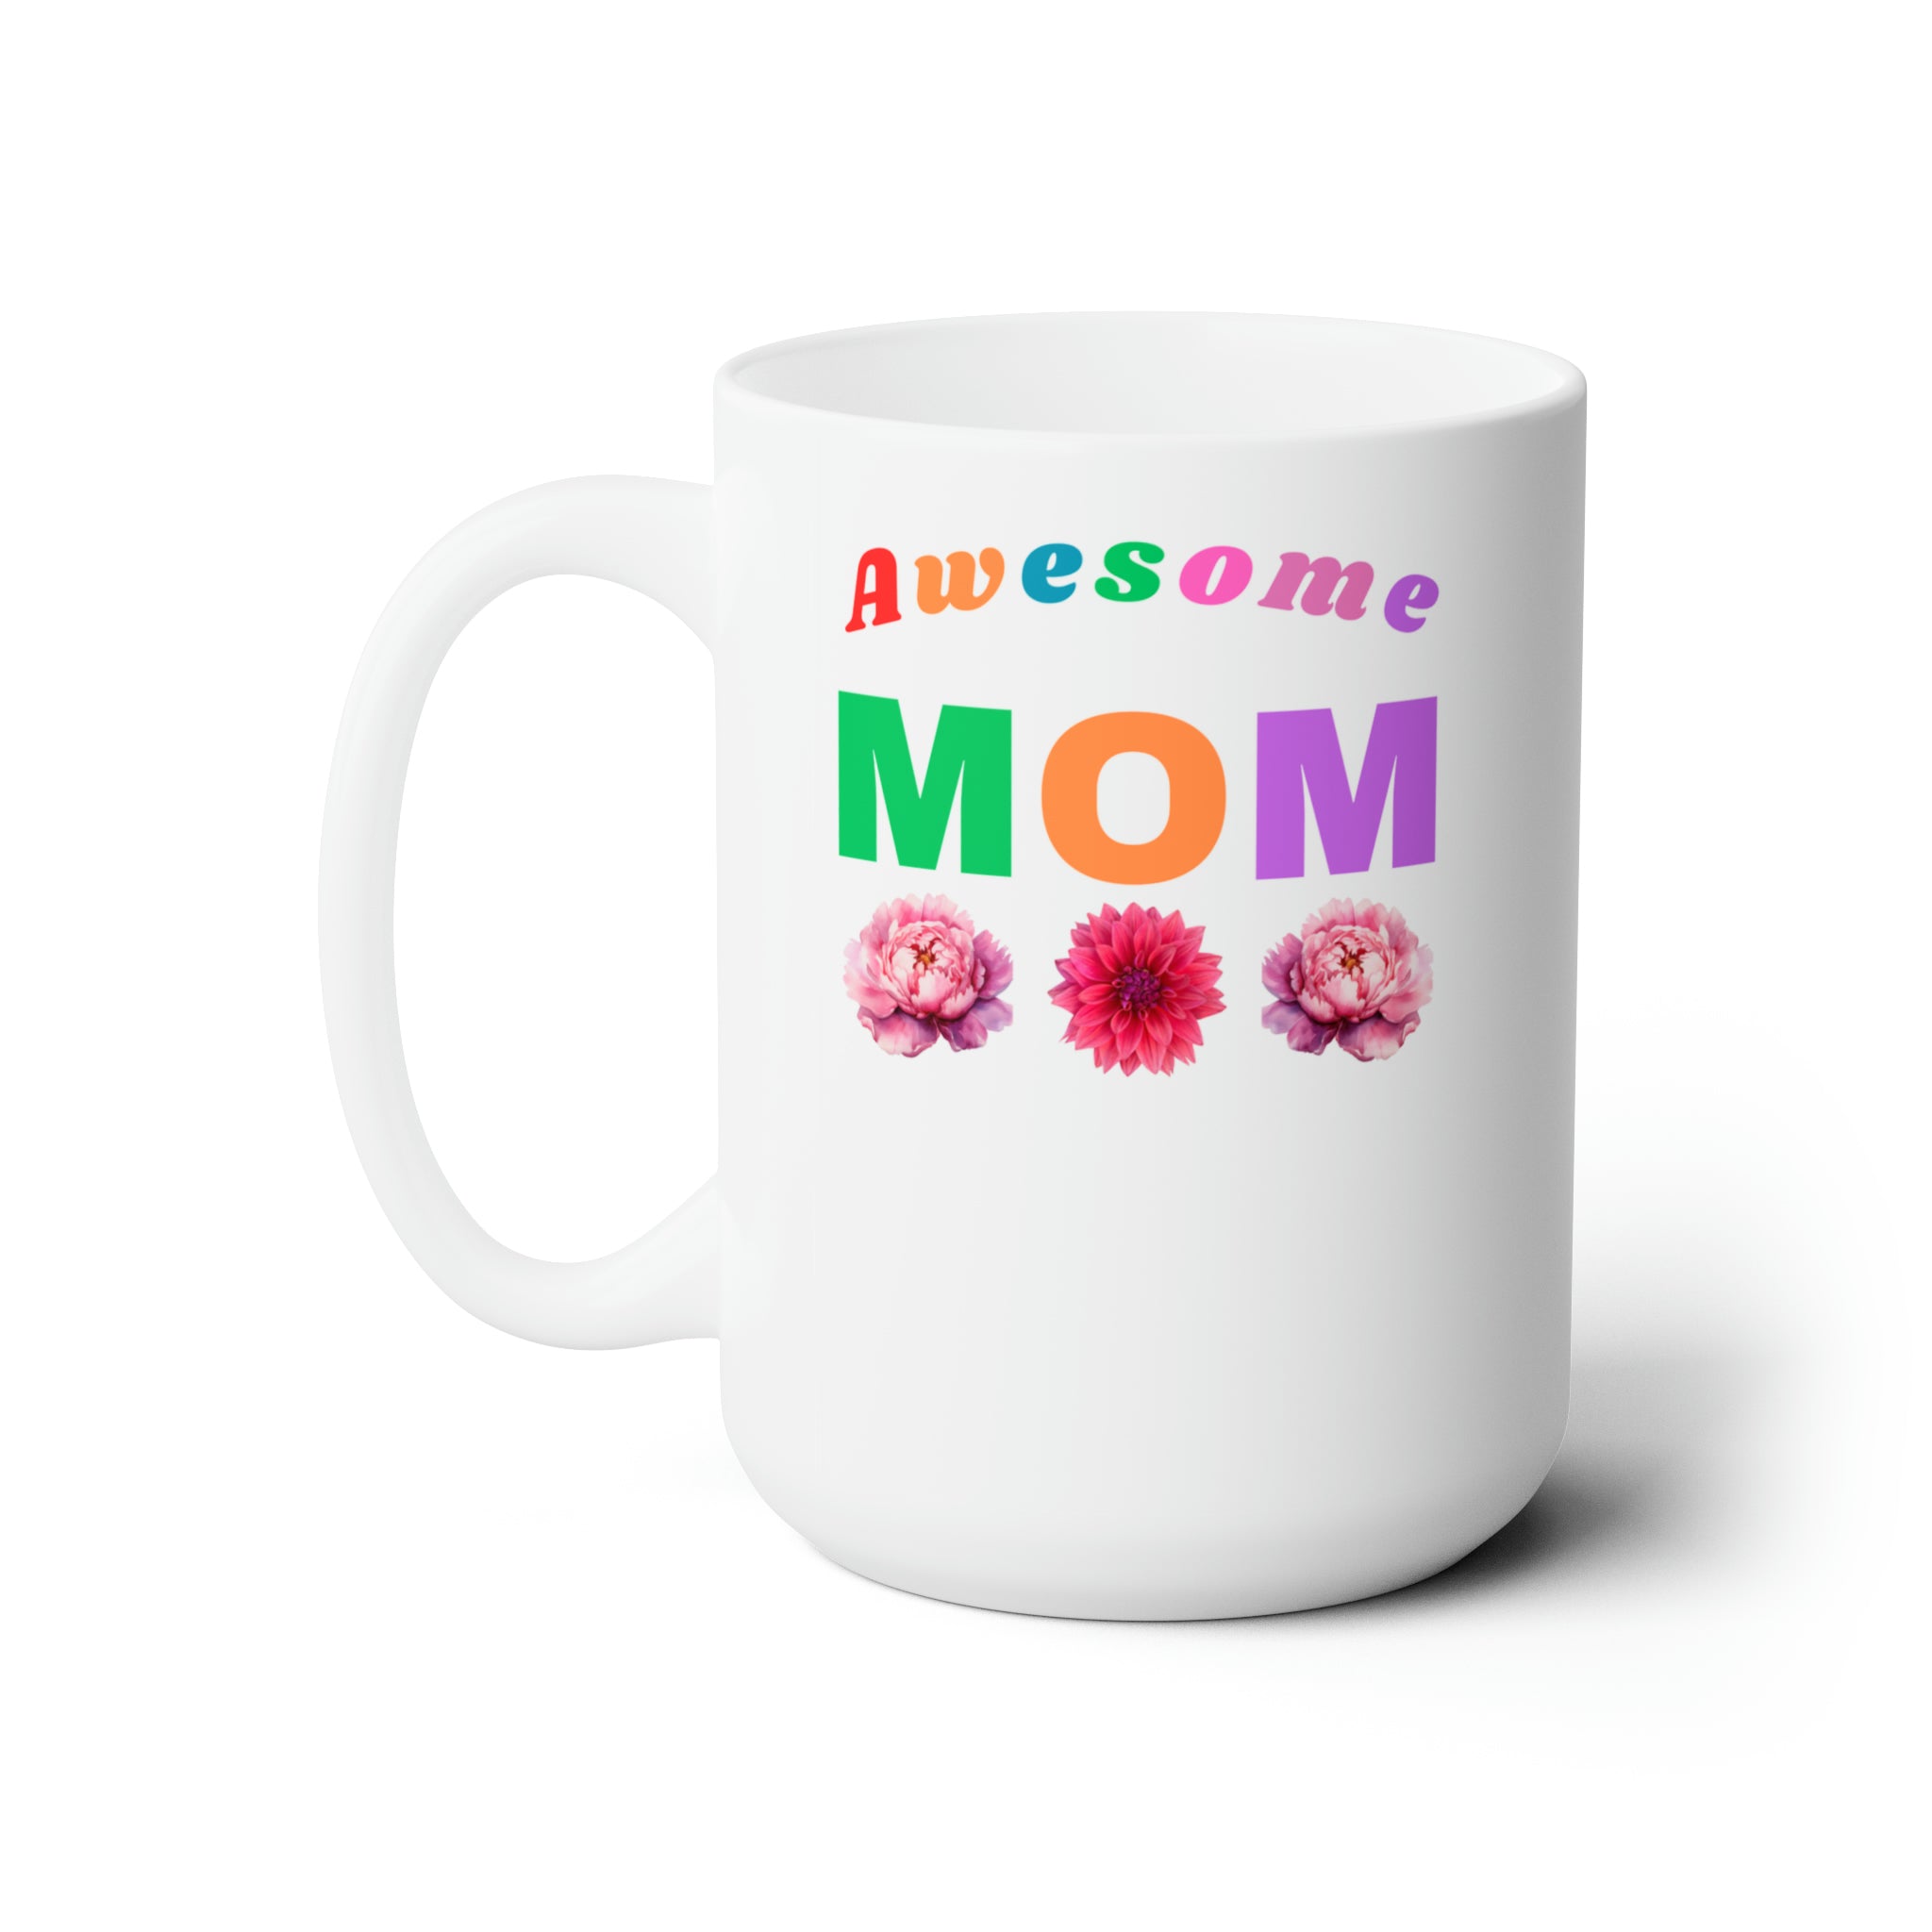 Awesome Mom Ceramic 15 oz Mug, Gift for Mom, Mother's Day Gift